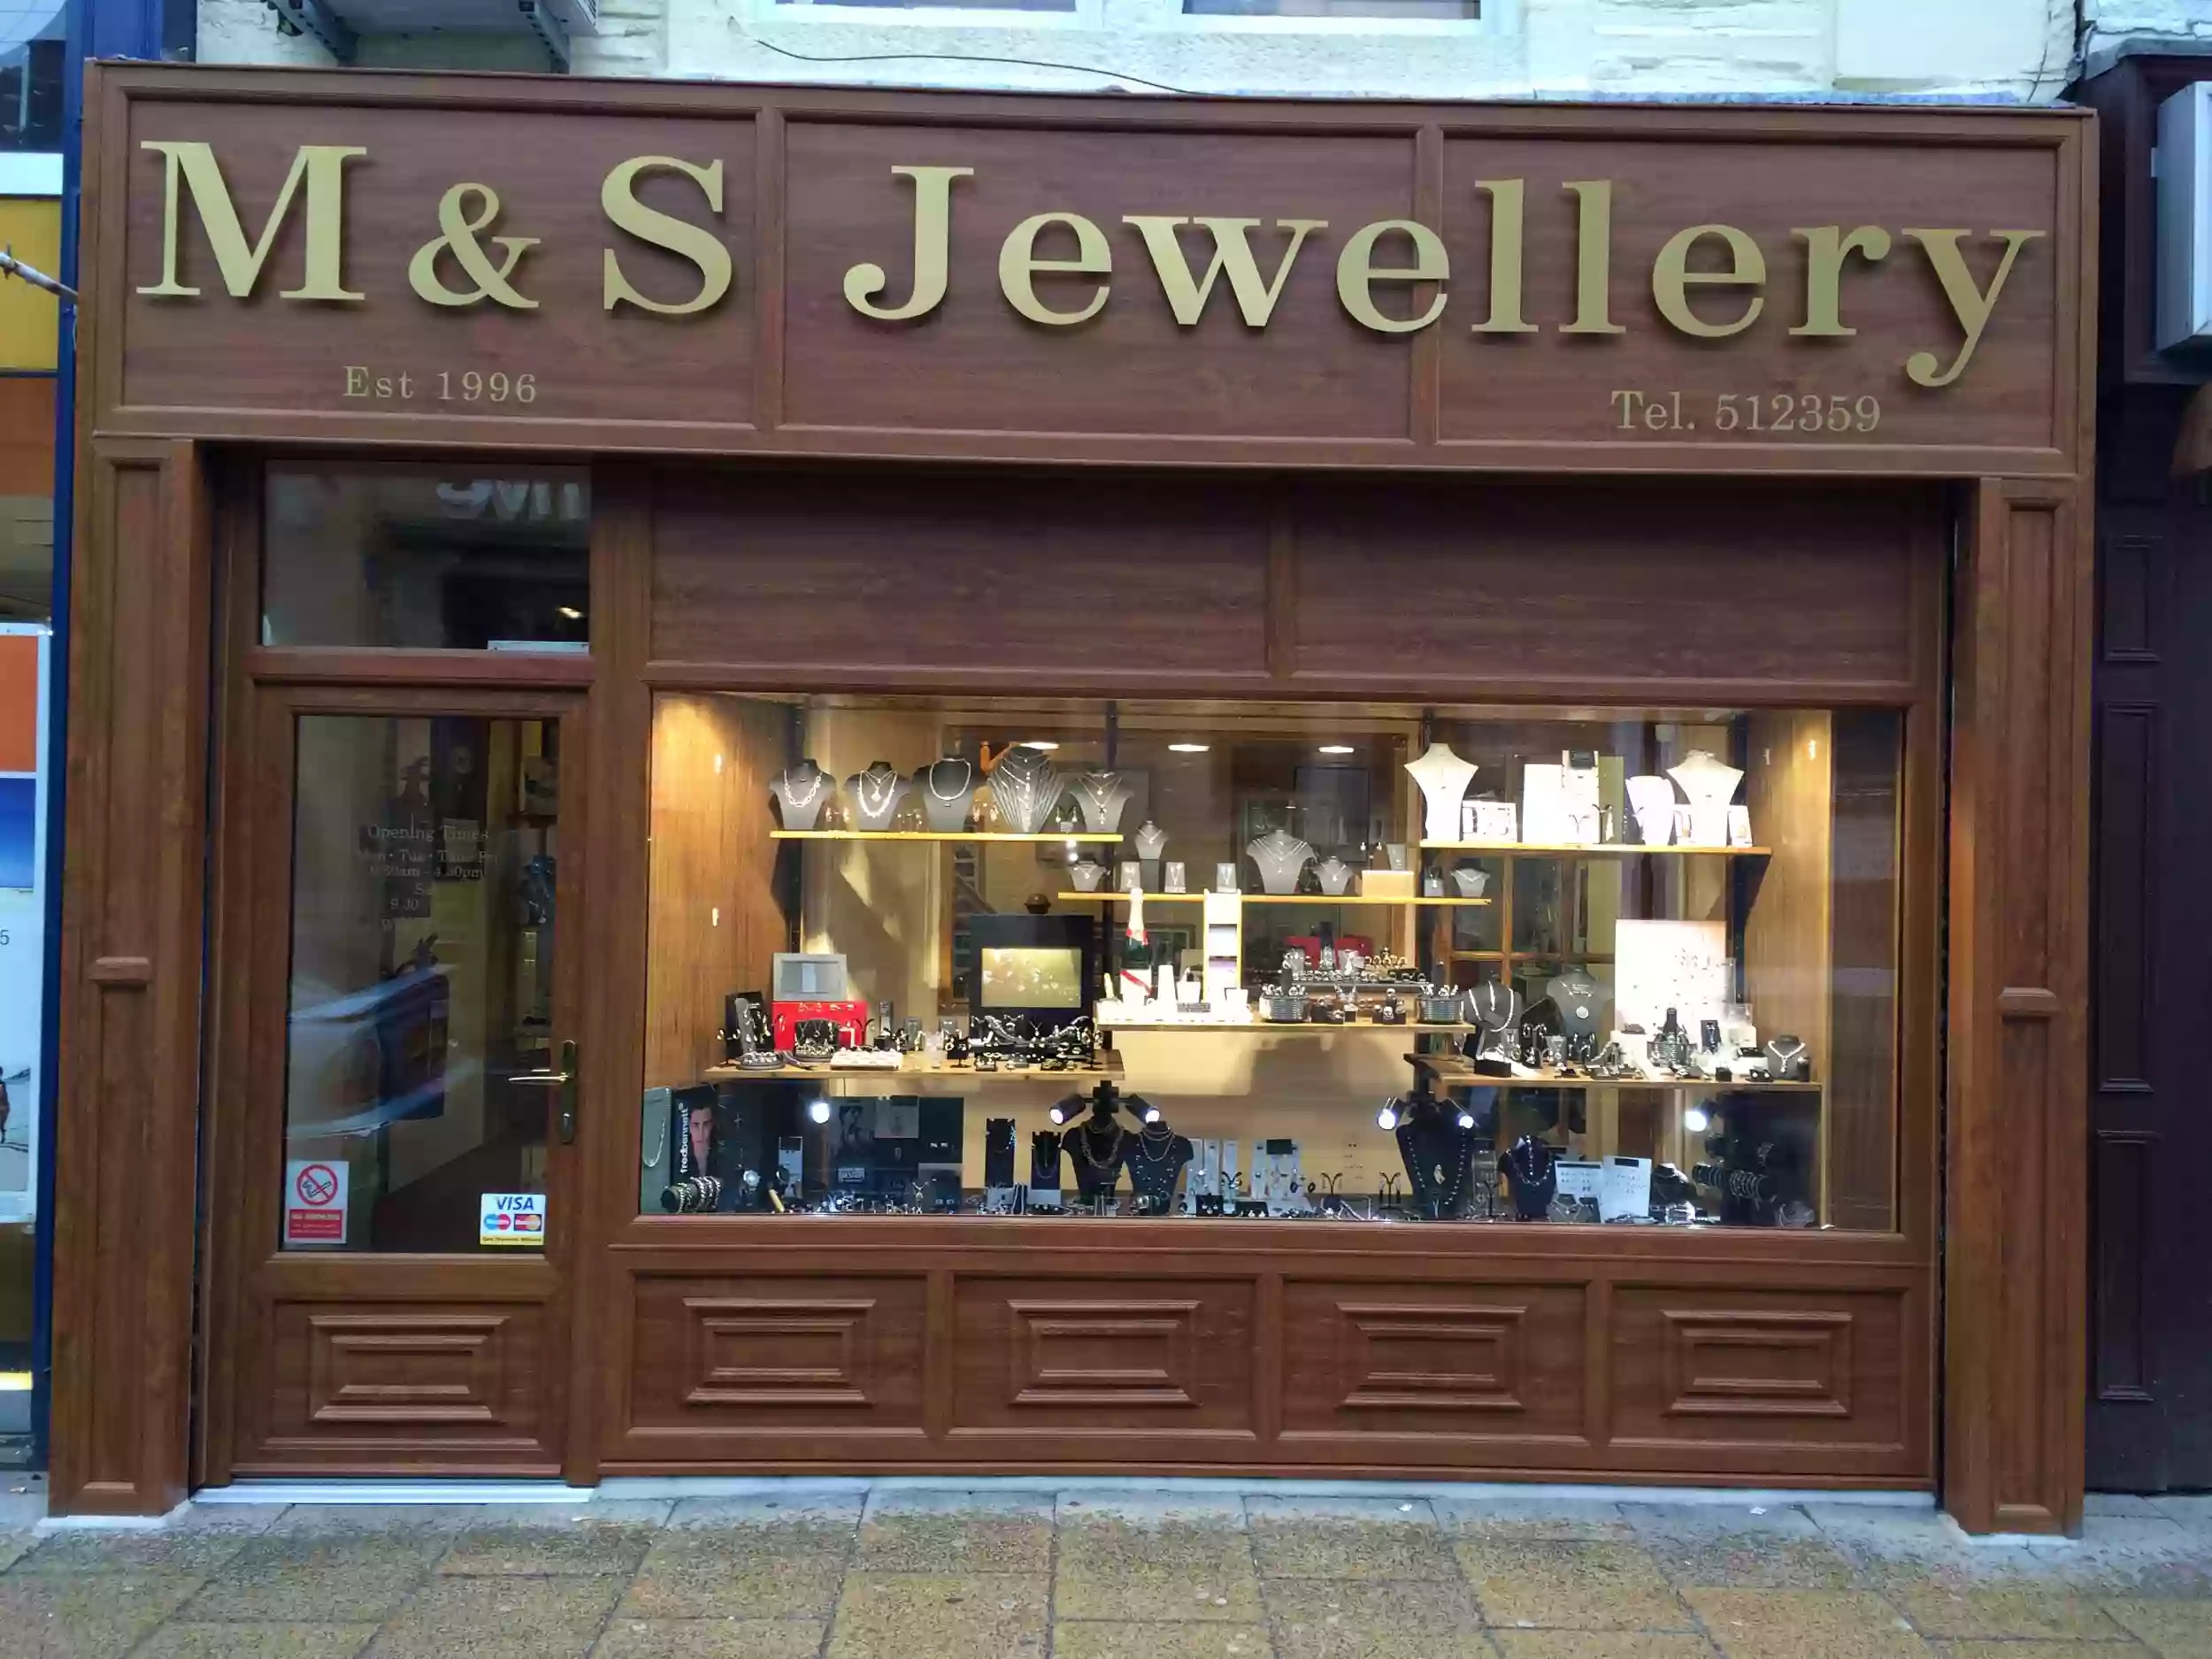 M & S Jewellery